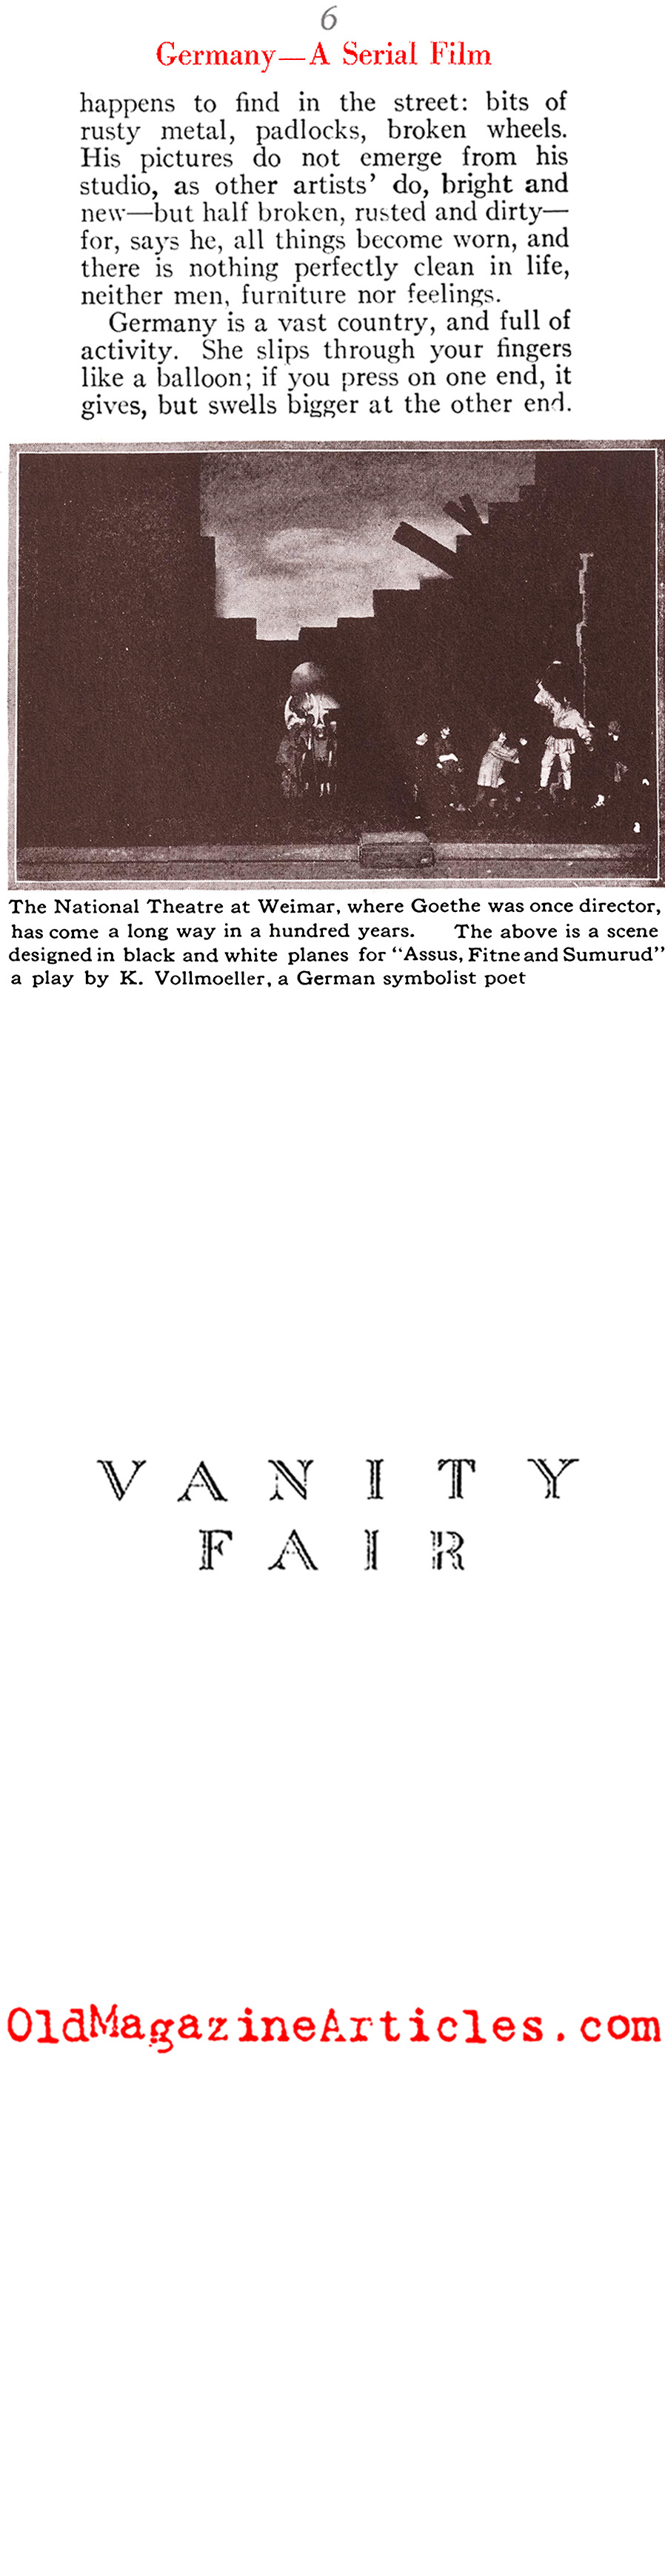 Tristan Tzara on the New Expressionists (Vanity Fair Magazine, 1923)